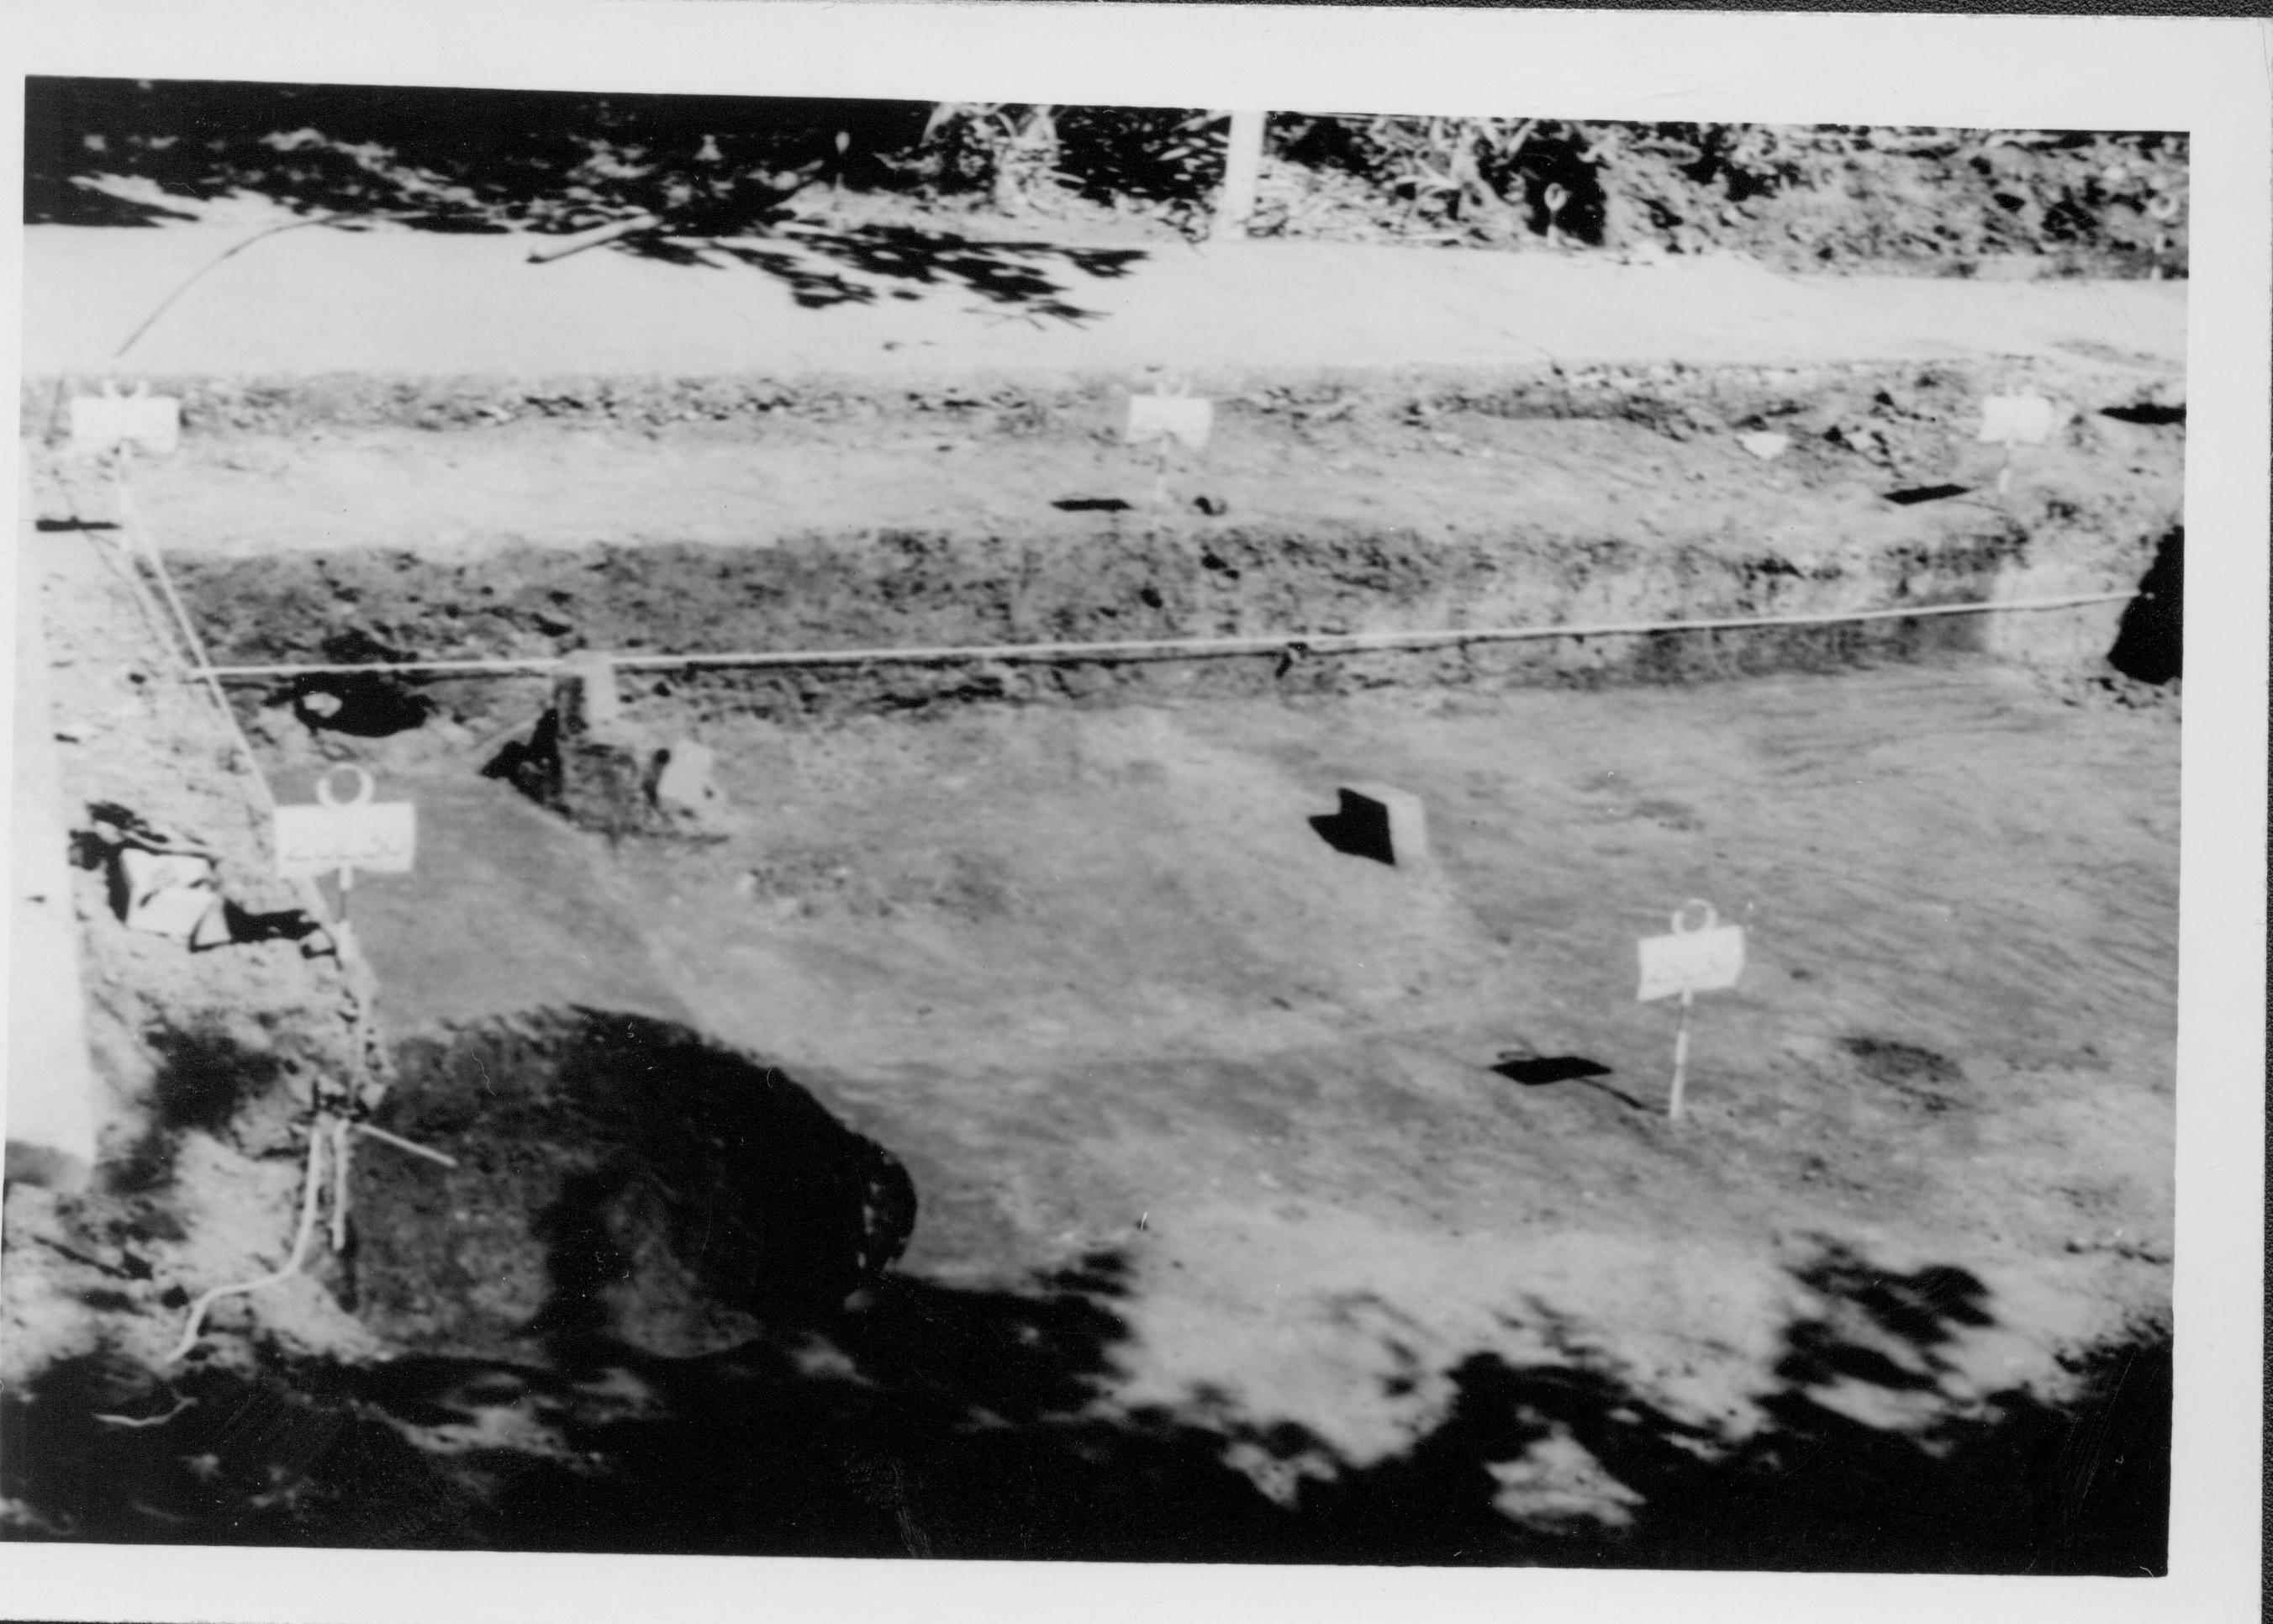 Richard Hagen 1950 - excavation of Lincoln backyard  Lincoln, Home, excavation, archaeology, Hagen